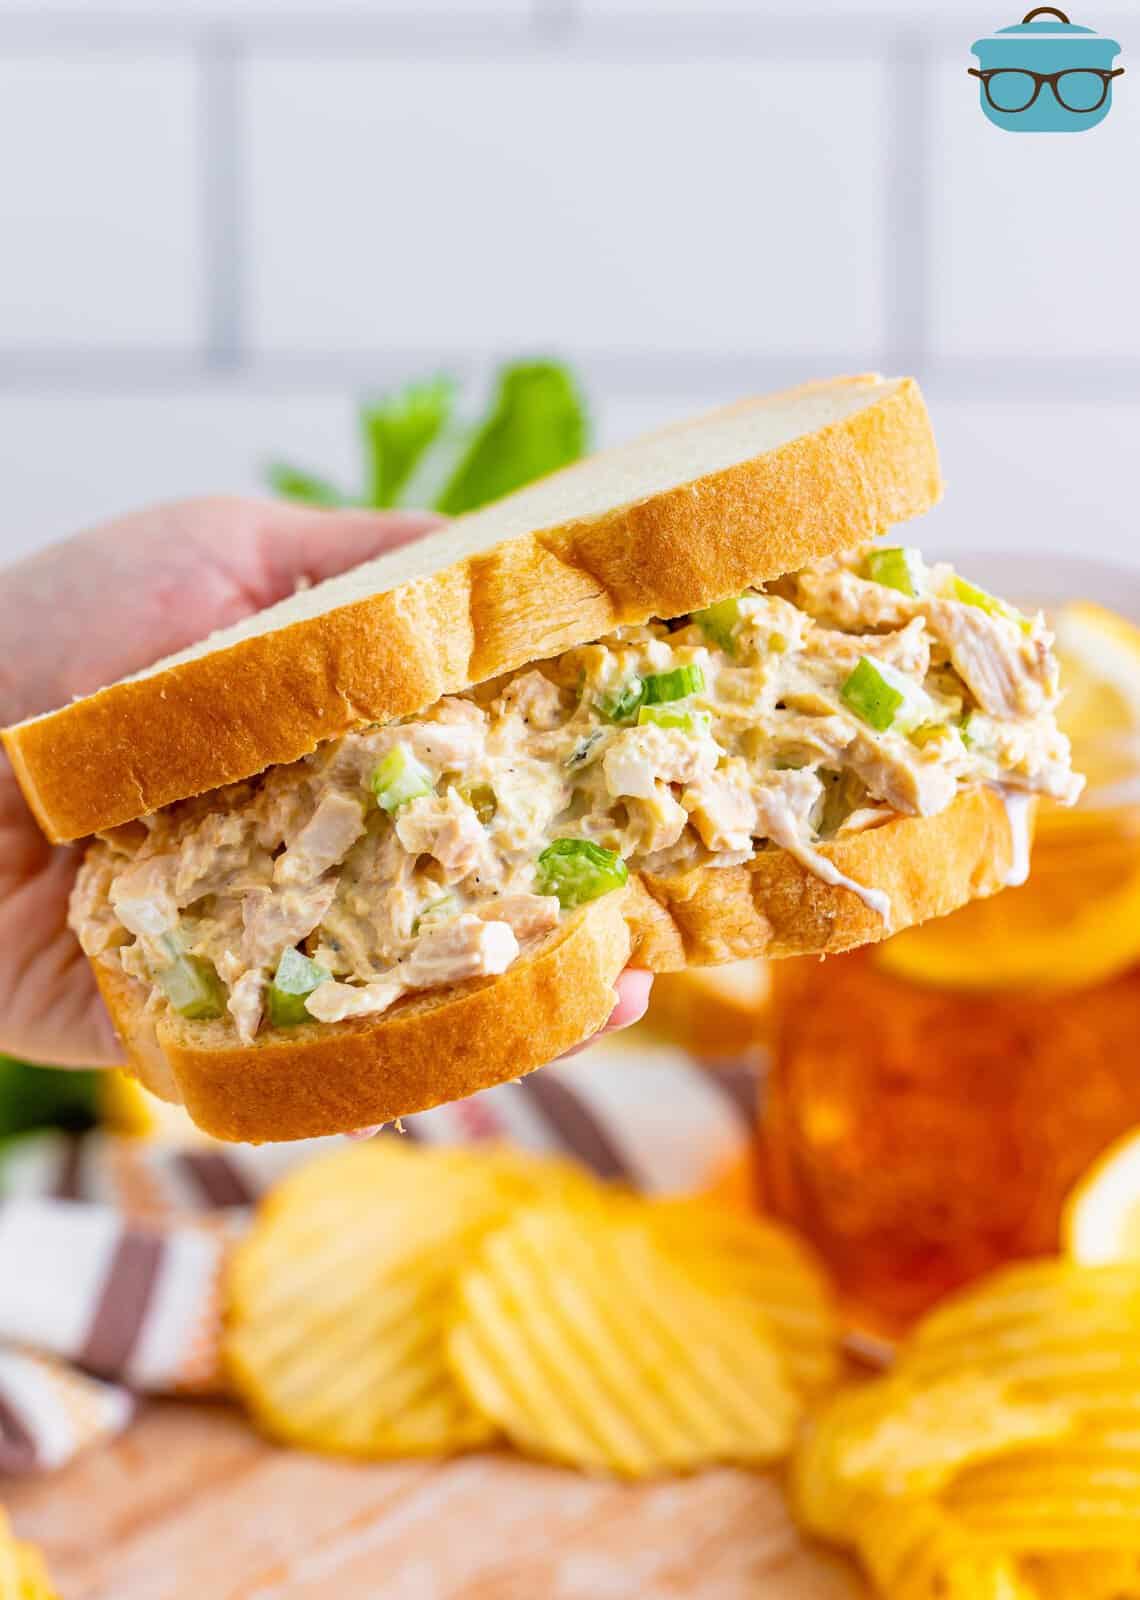 A hand holding a tuna salad sandwich.